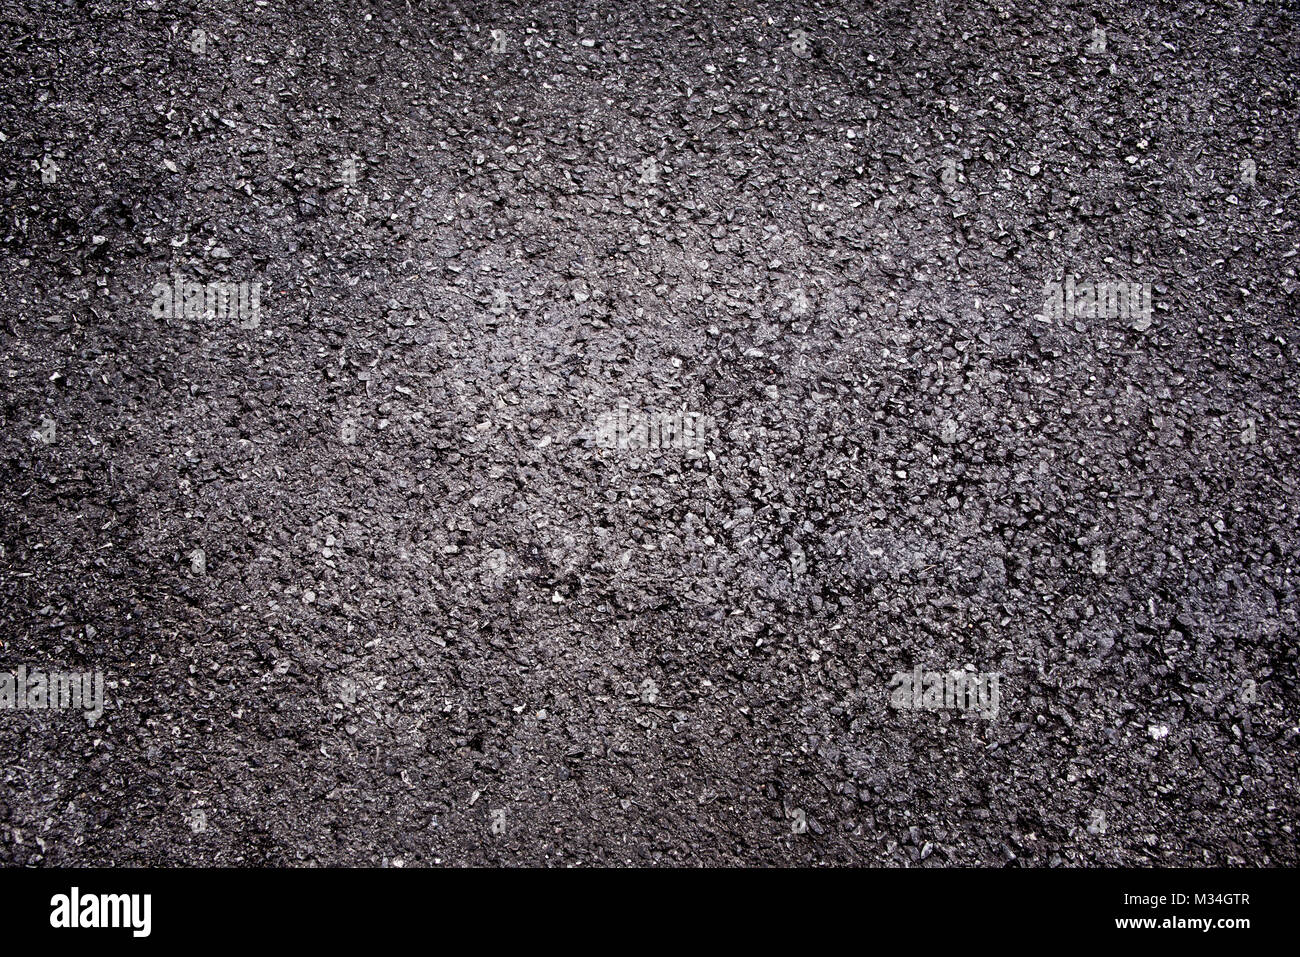 Asphalt road texture background Stock Photo